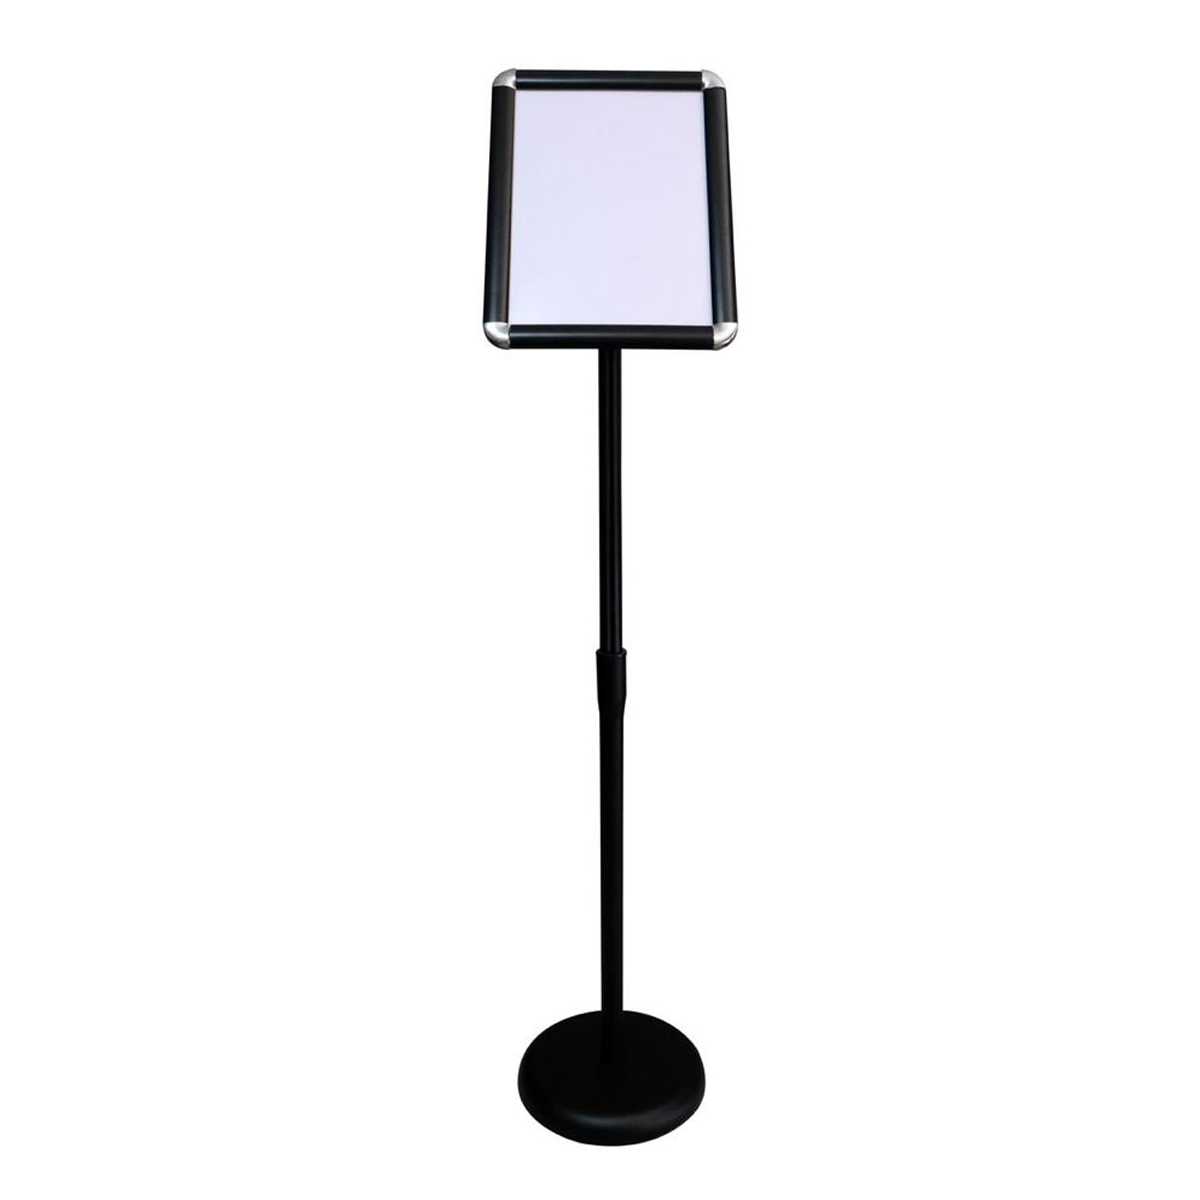 Pedestal Floor Standing Sign Holder (A4) with Snap Open Frame for Display - Black